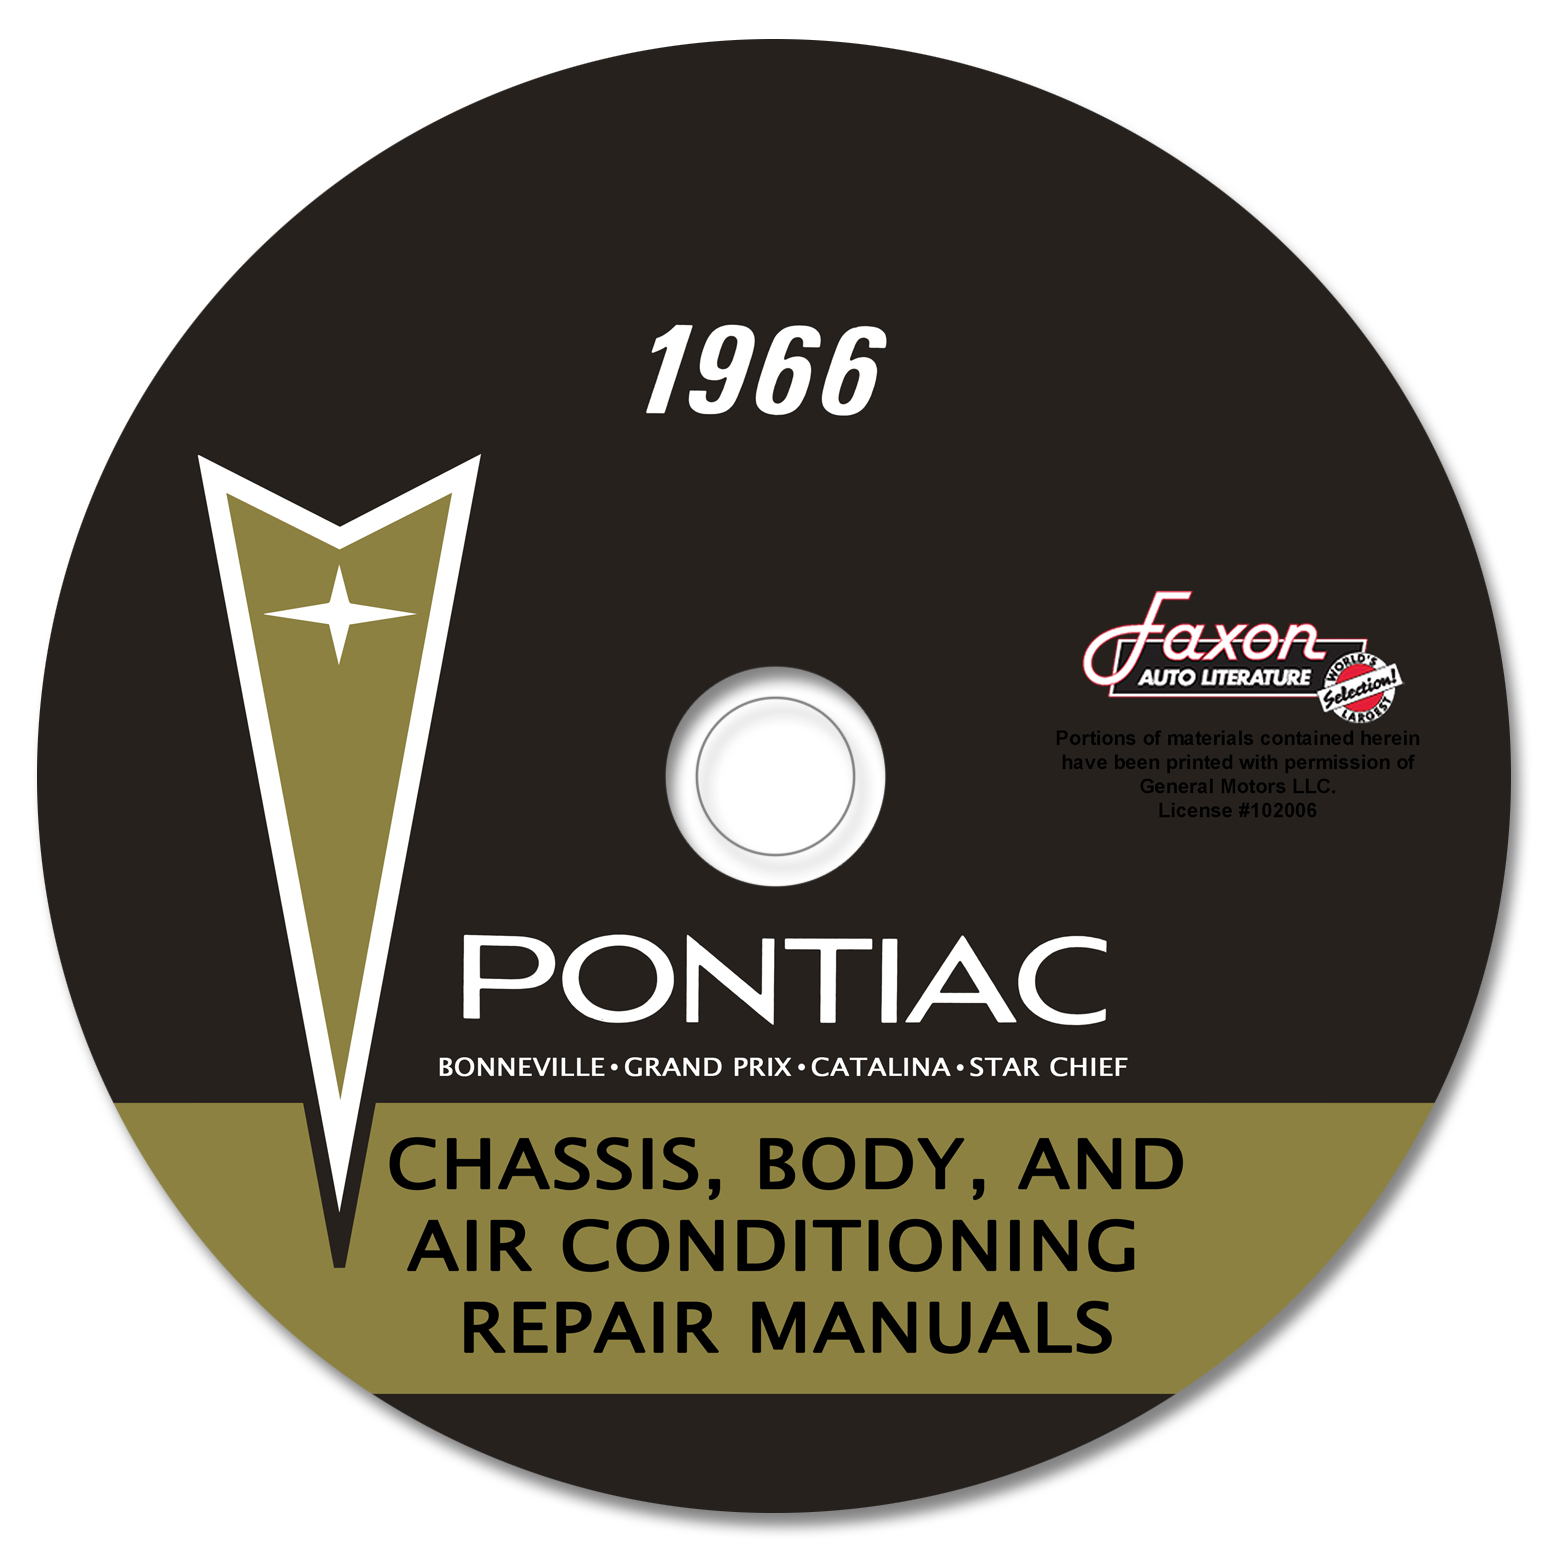 1966 Pontiac CD-ROM Body, A/C & Shop Manual for all models